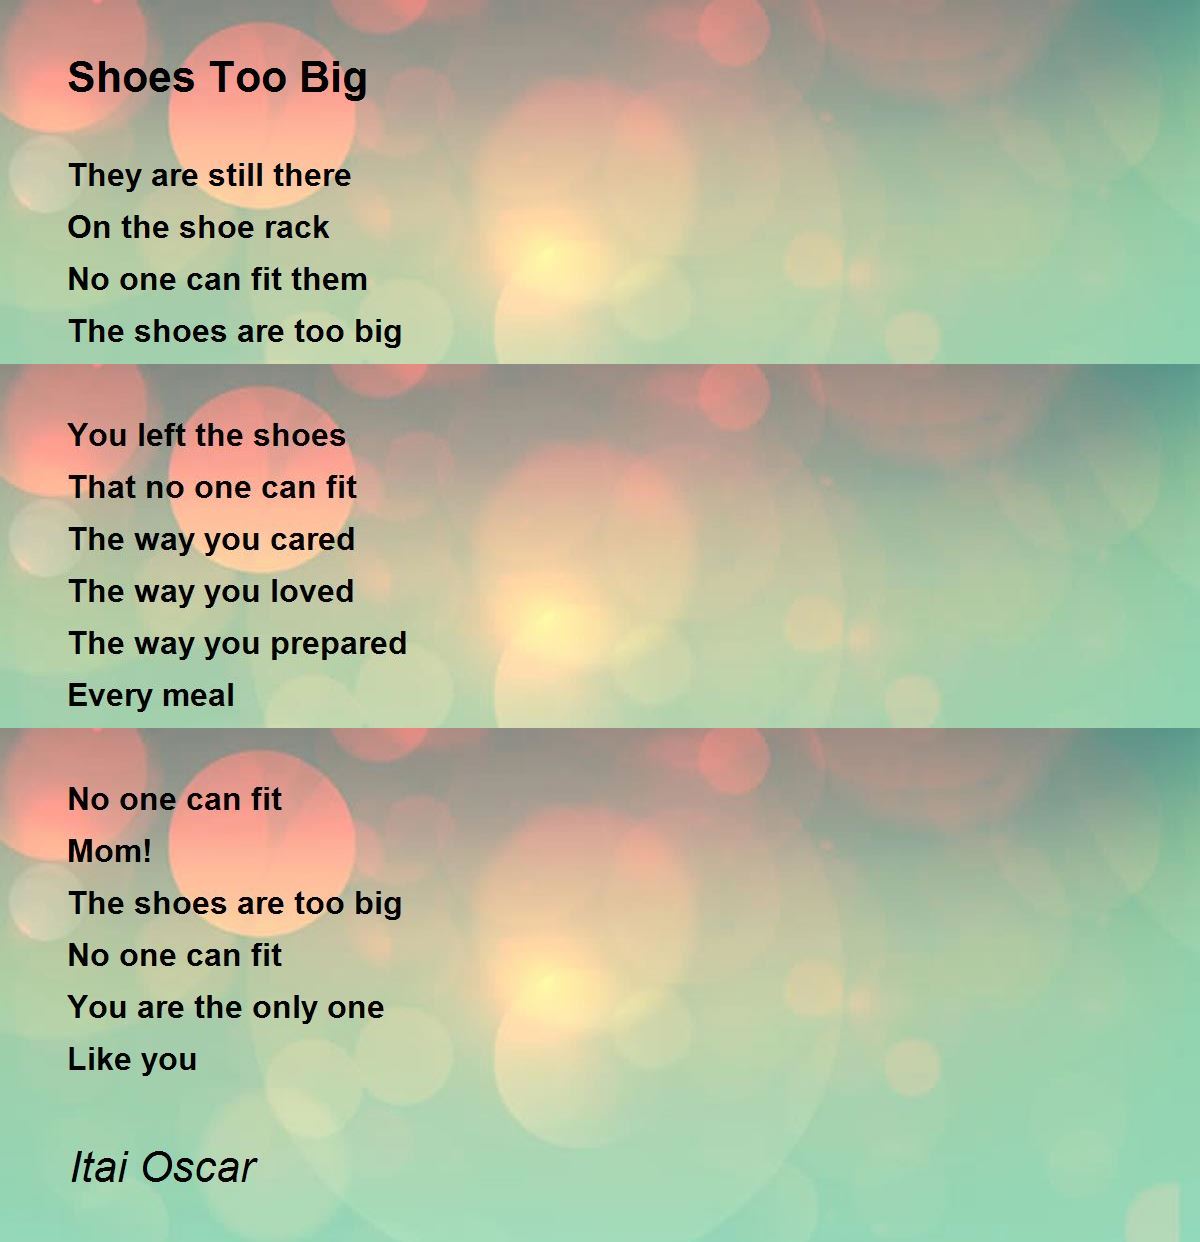 Shoes Too Big - Shoes Too Big Poem by Itai Oscar